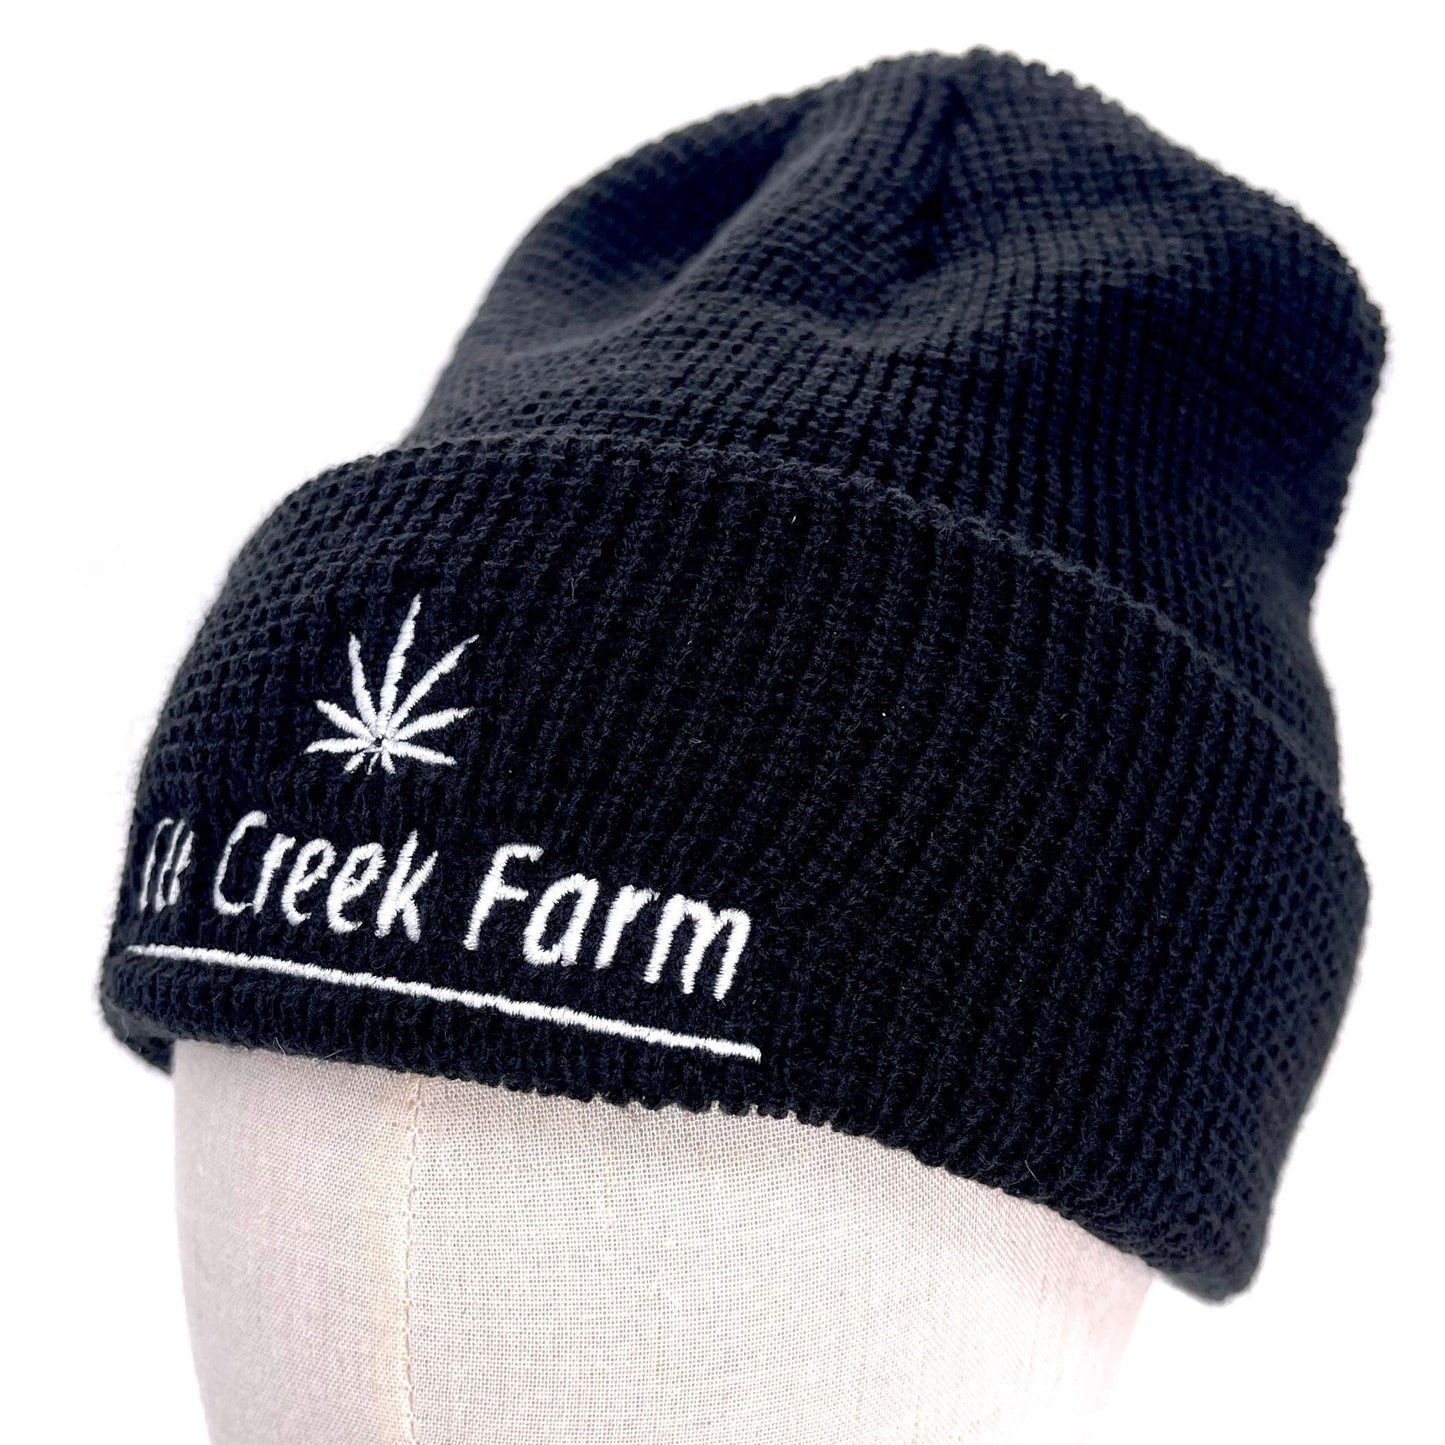 Elk Creek Farm Knit Beanie